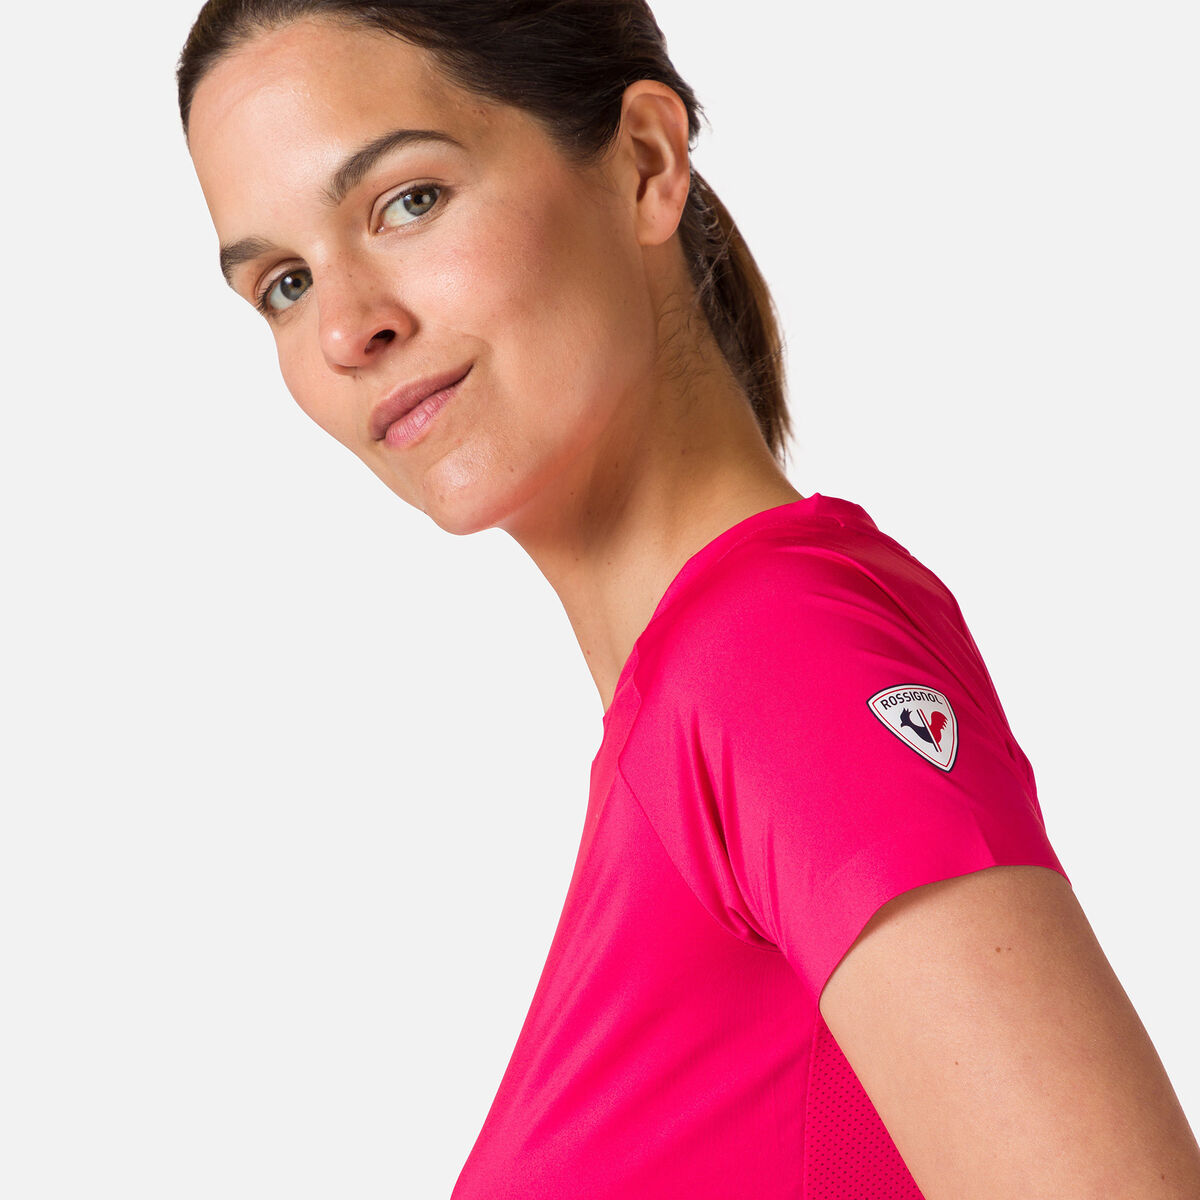 Rossignol Damen-T-Shirt Tech pinkpurple